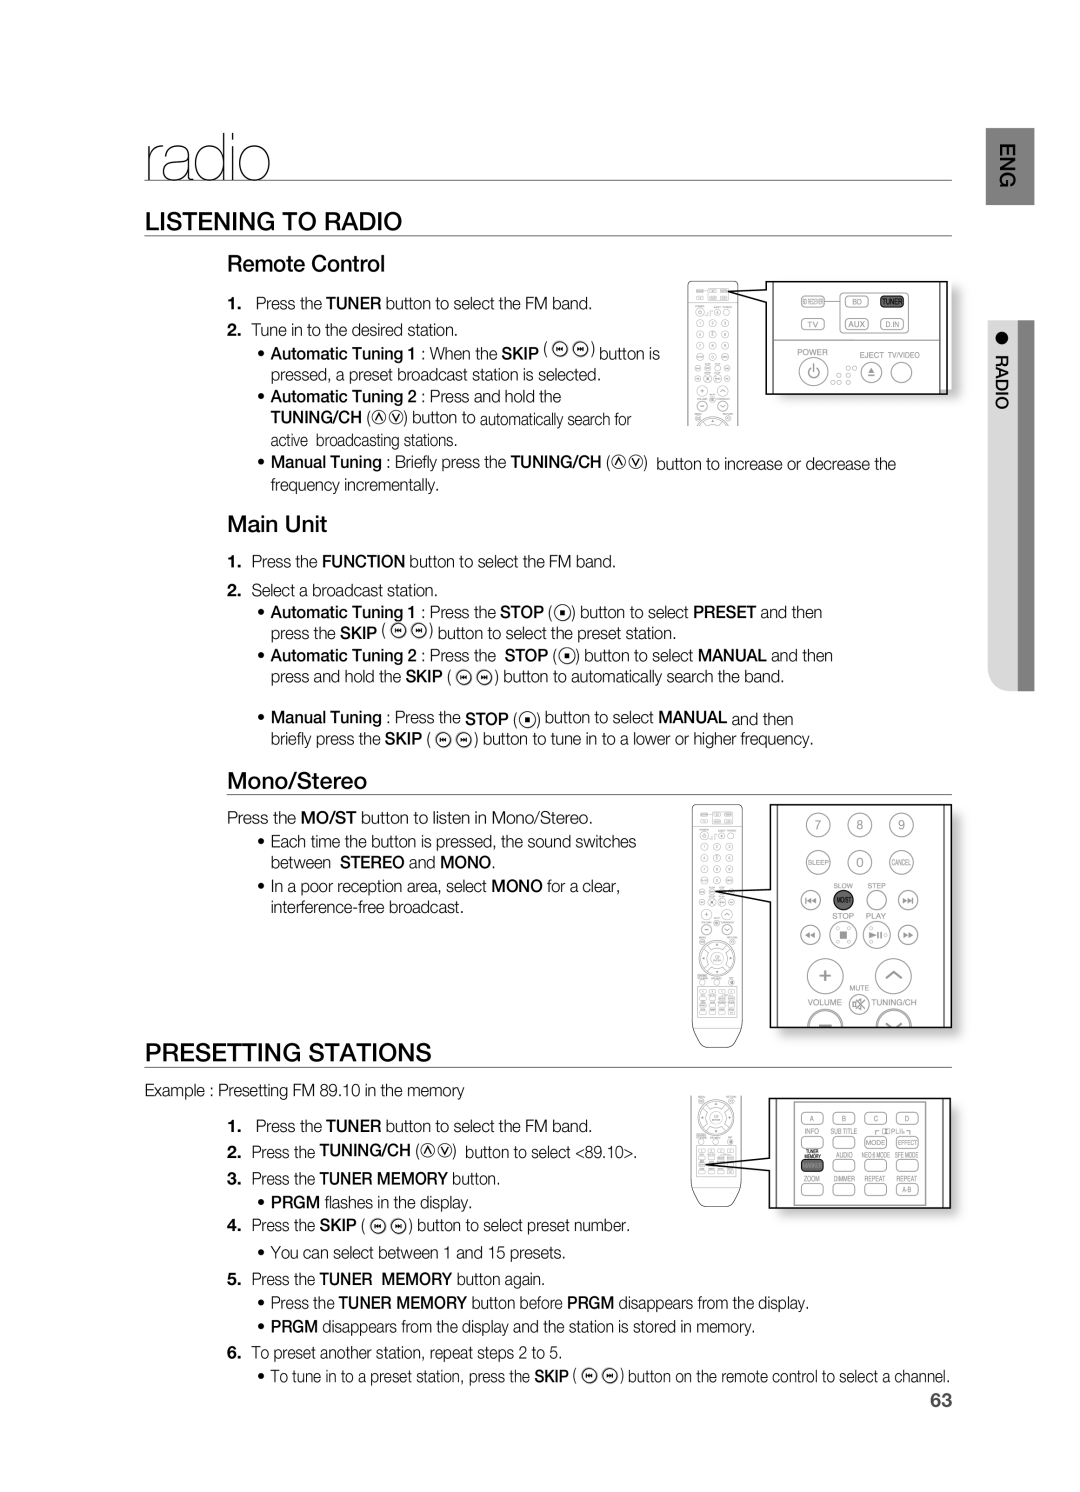 Samsung HT-BD2S manual radio, LISTEnIng TO RADIO, PRESETTIng STATIOnS, Remote Control, Main Unit, Mono/Stereo 